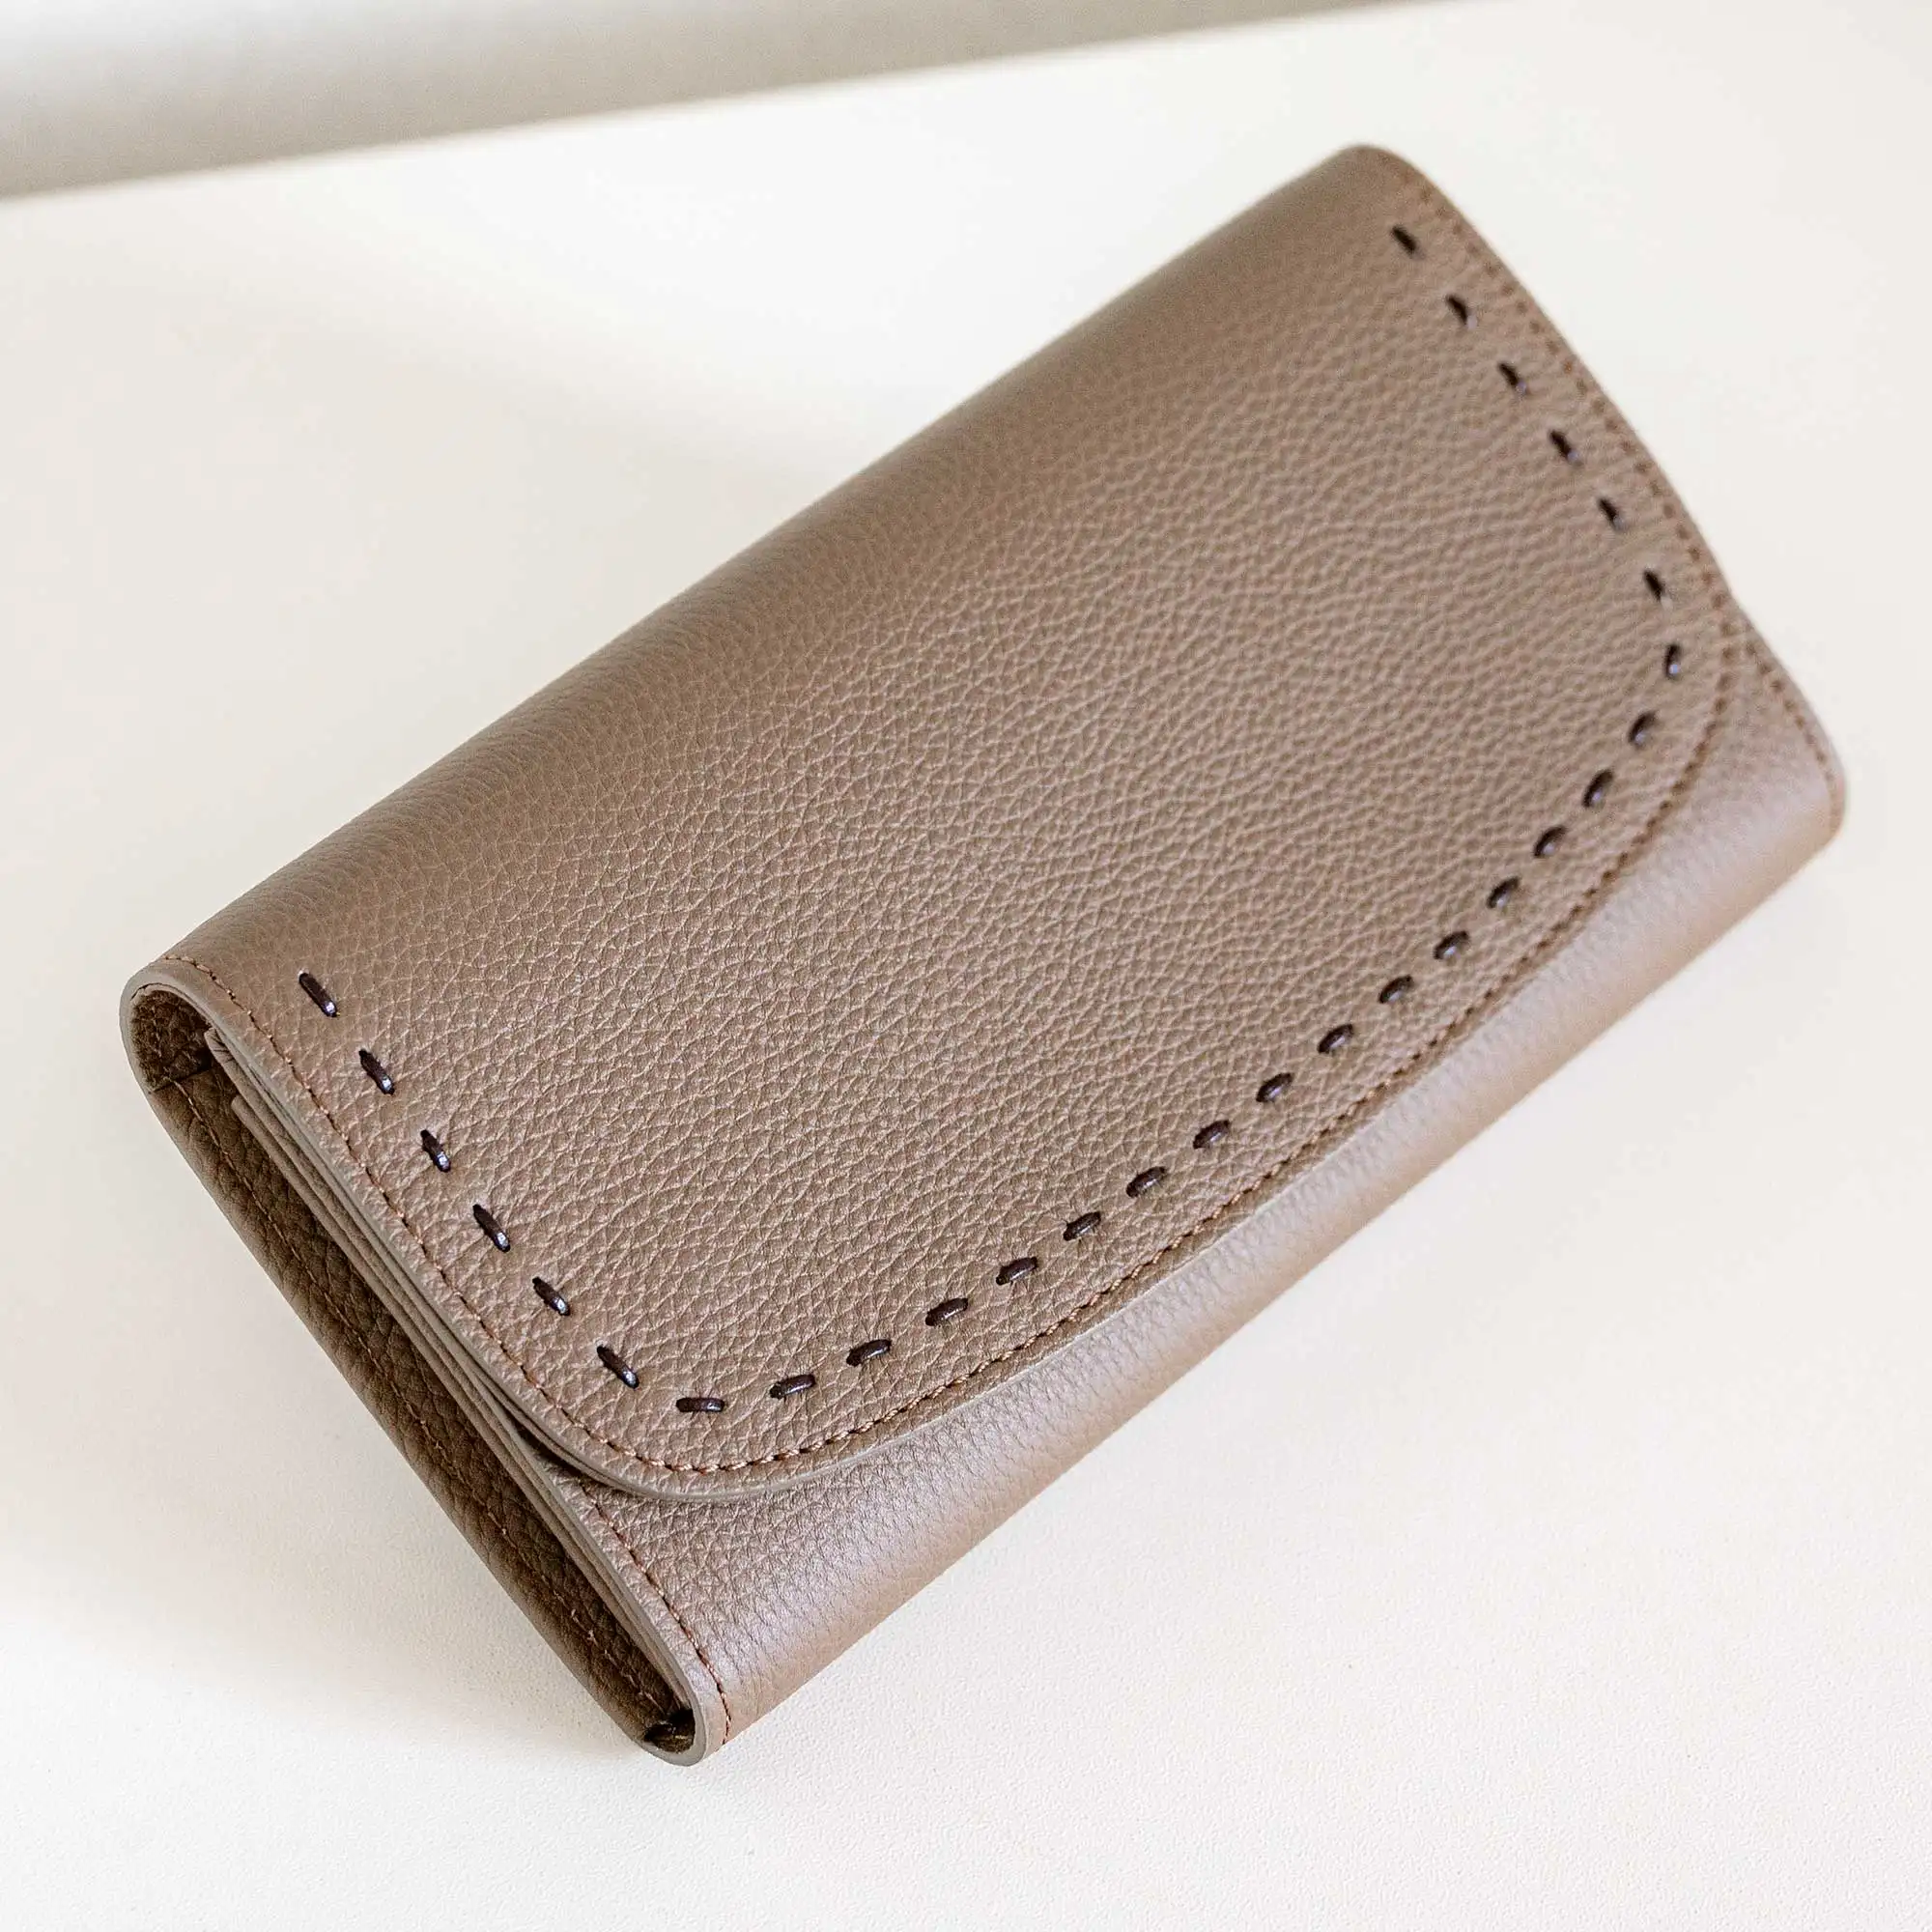 Comfort simple unisex handmade fashionable leather wallet women